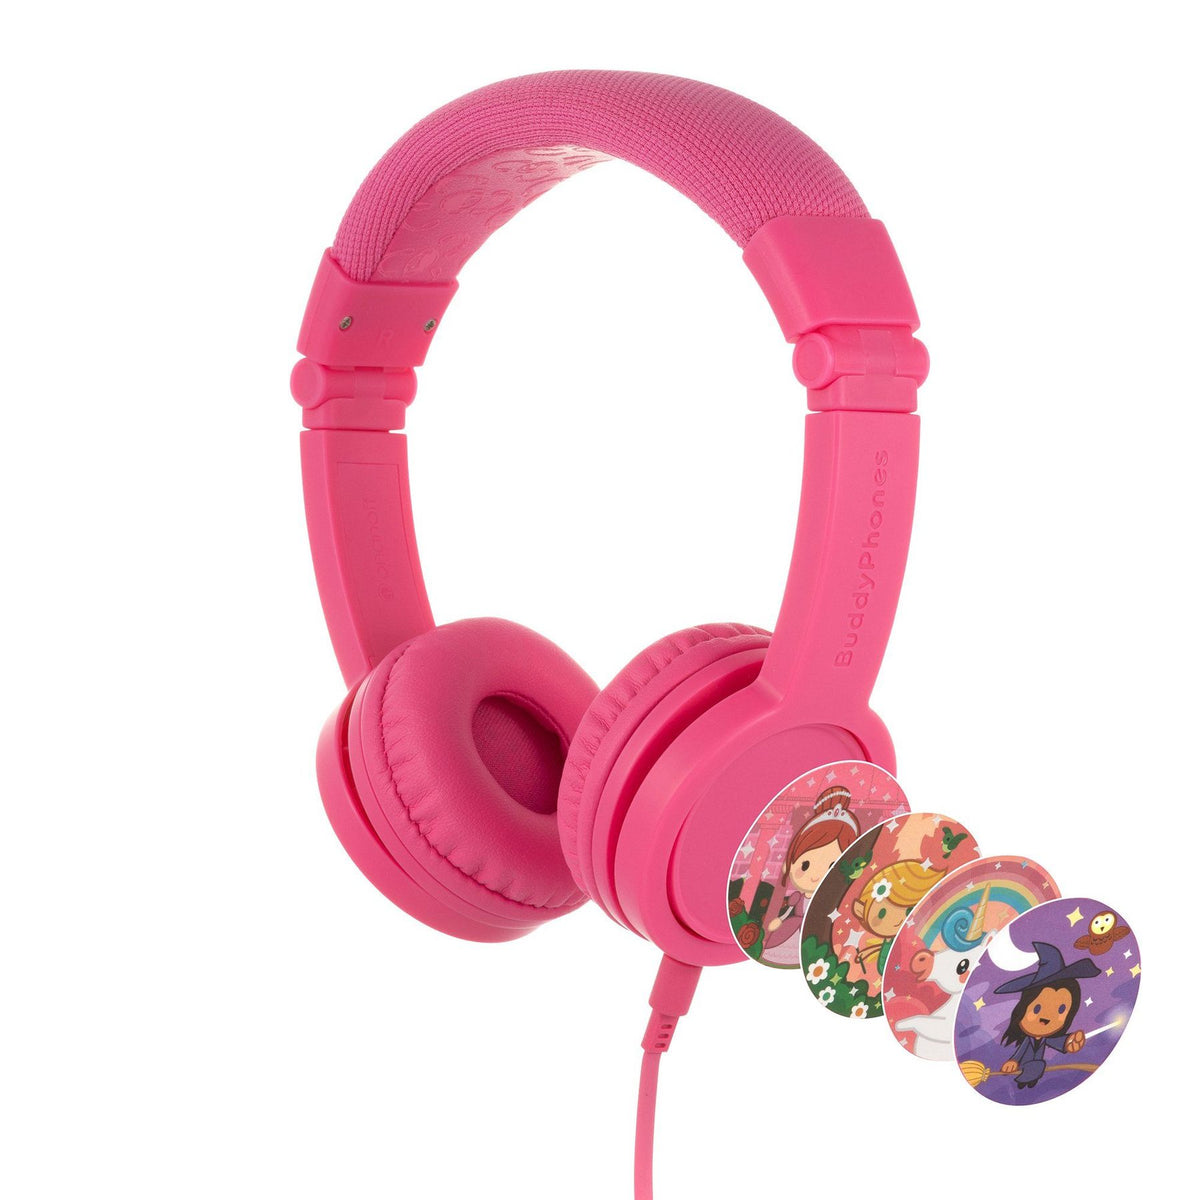 BUDDYPHONES Explore Plus Foldable Headphones with Mic - Rose Pink